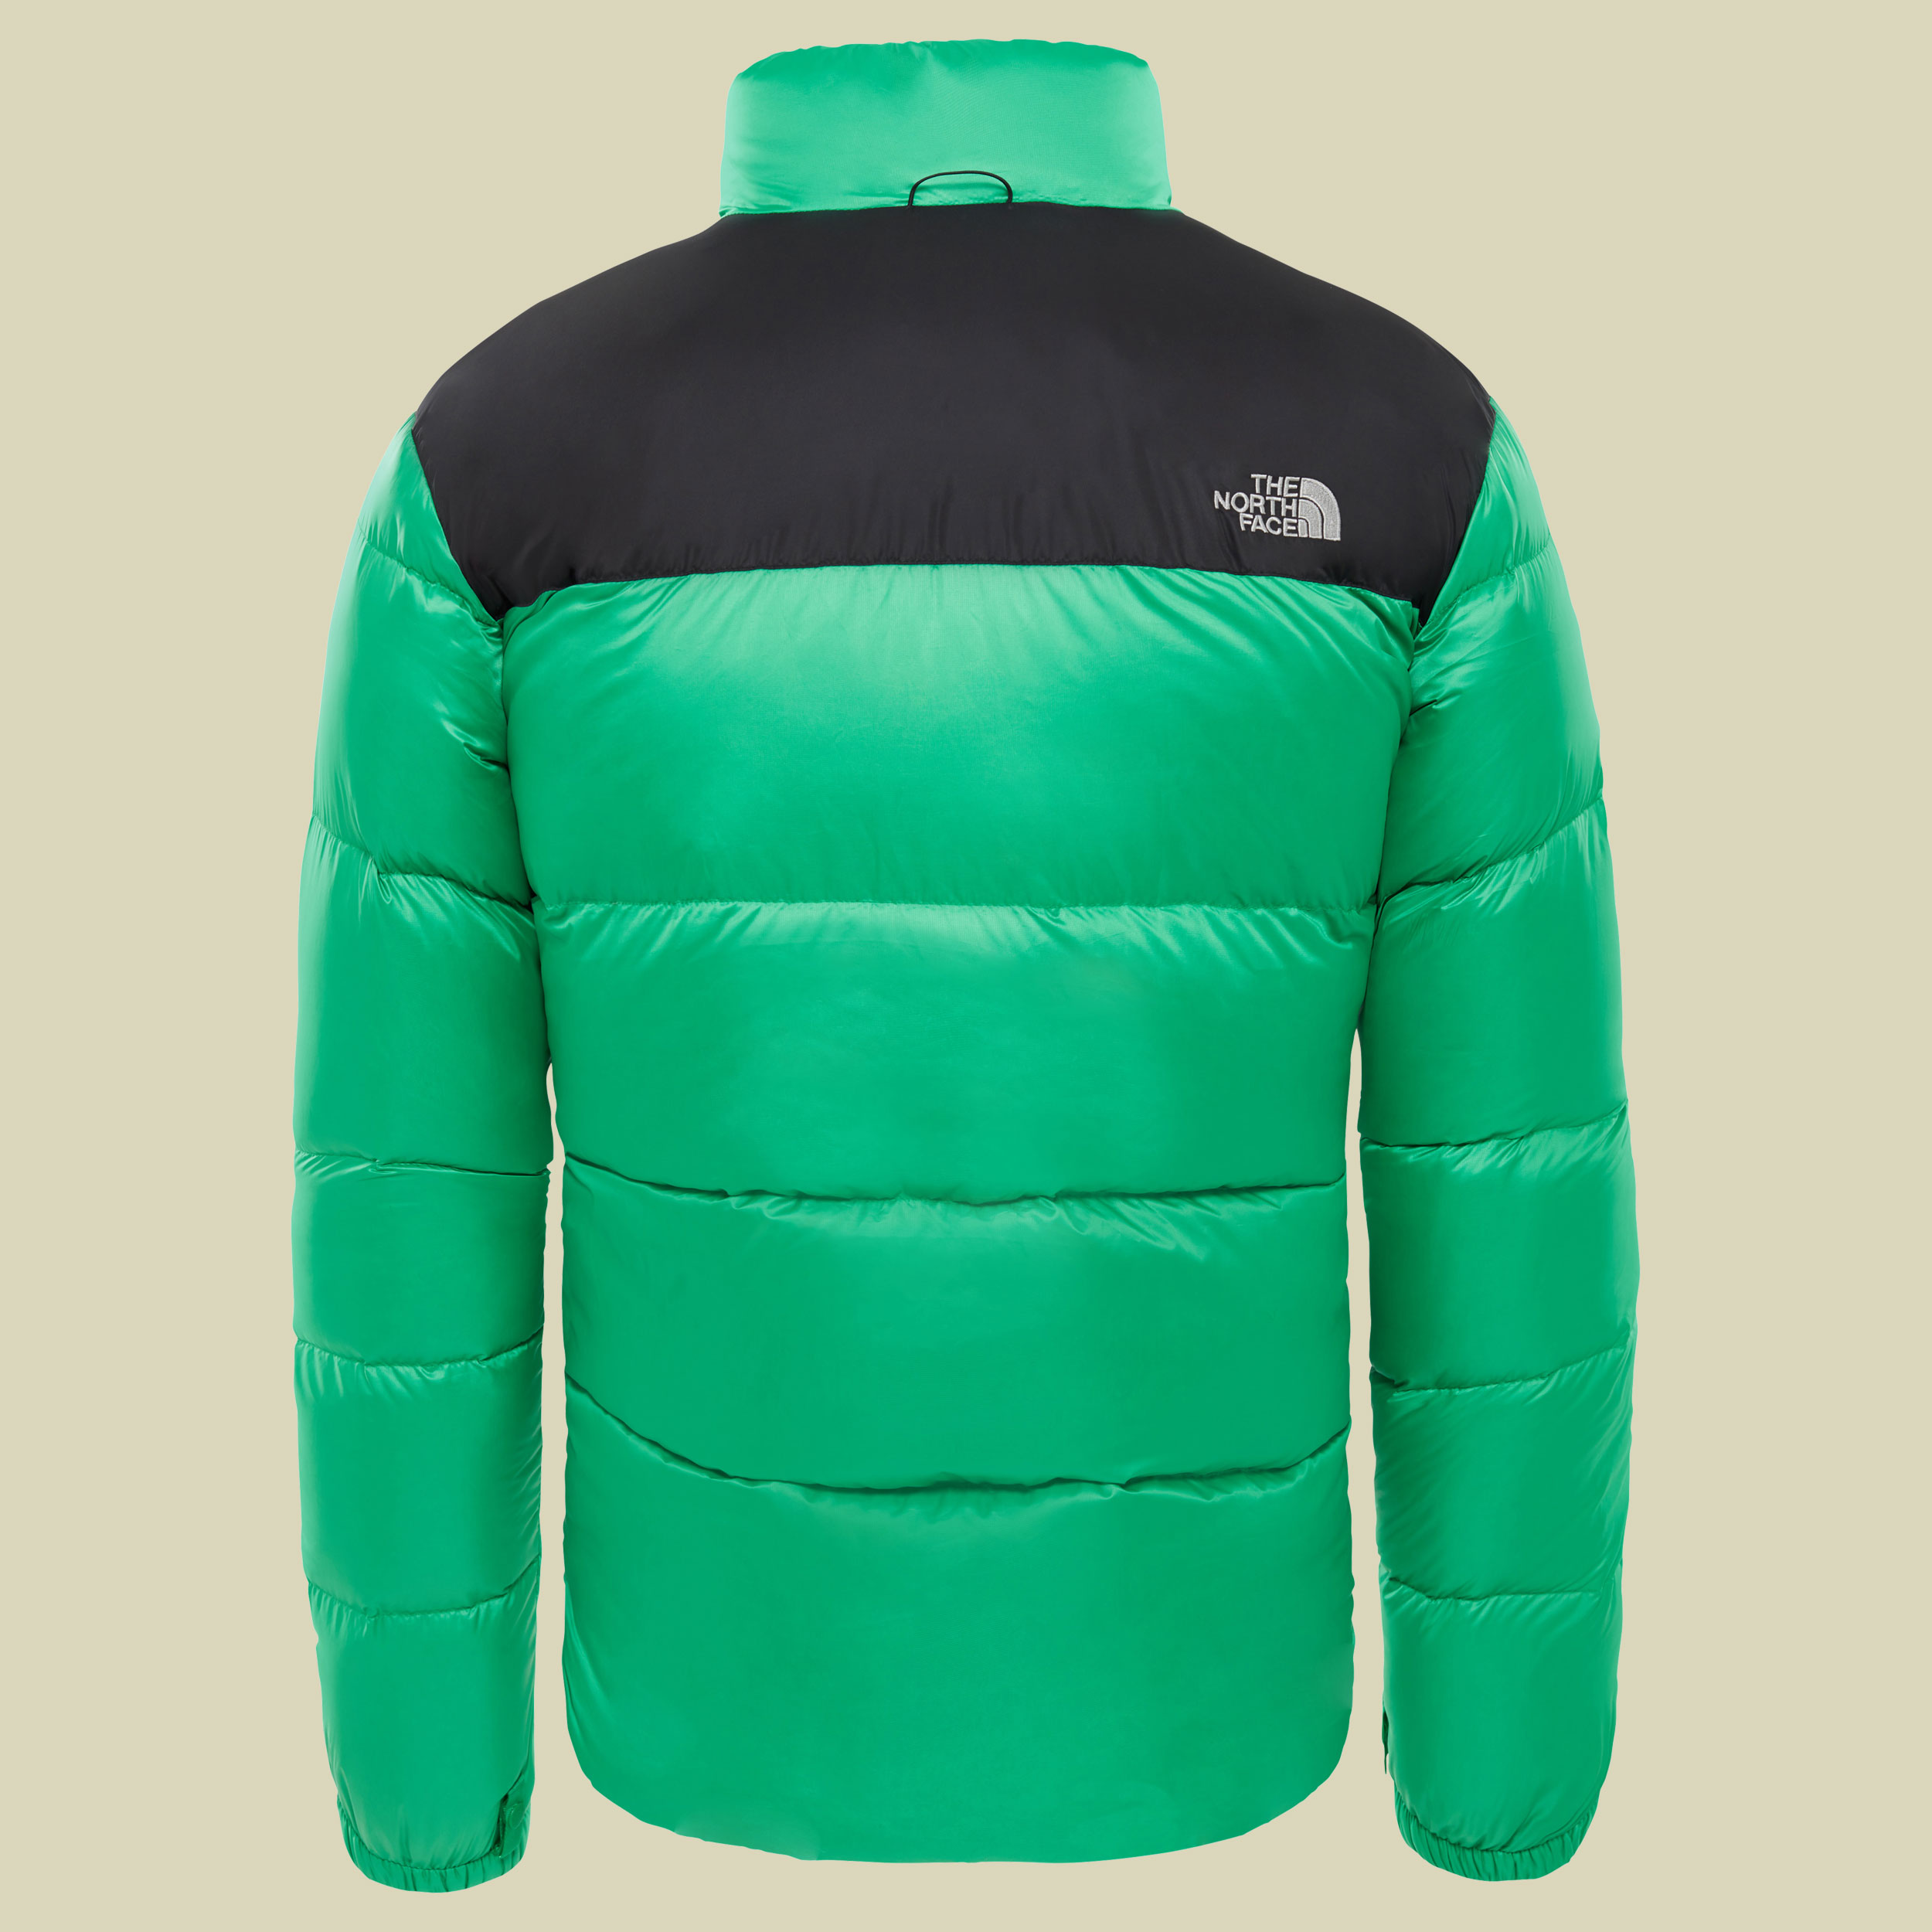 Nuptse III Jacket Men Größe S Farbe primary green/TNF black